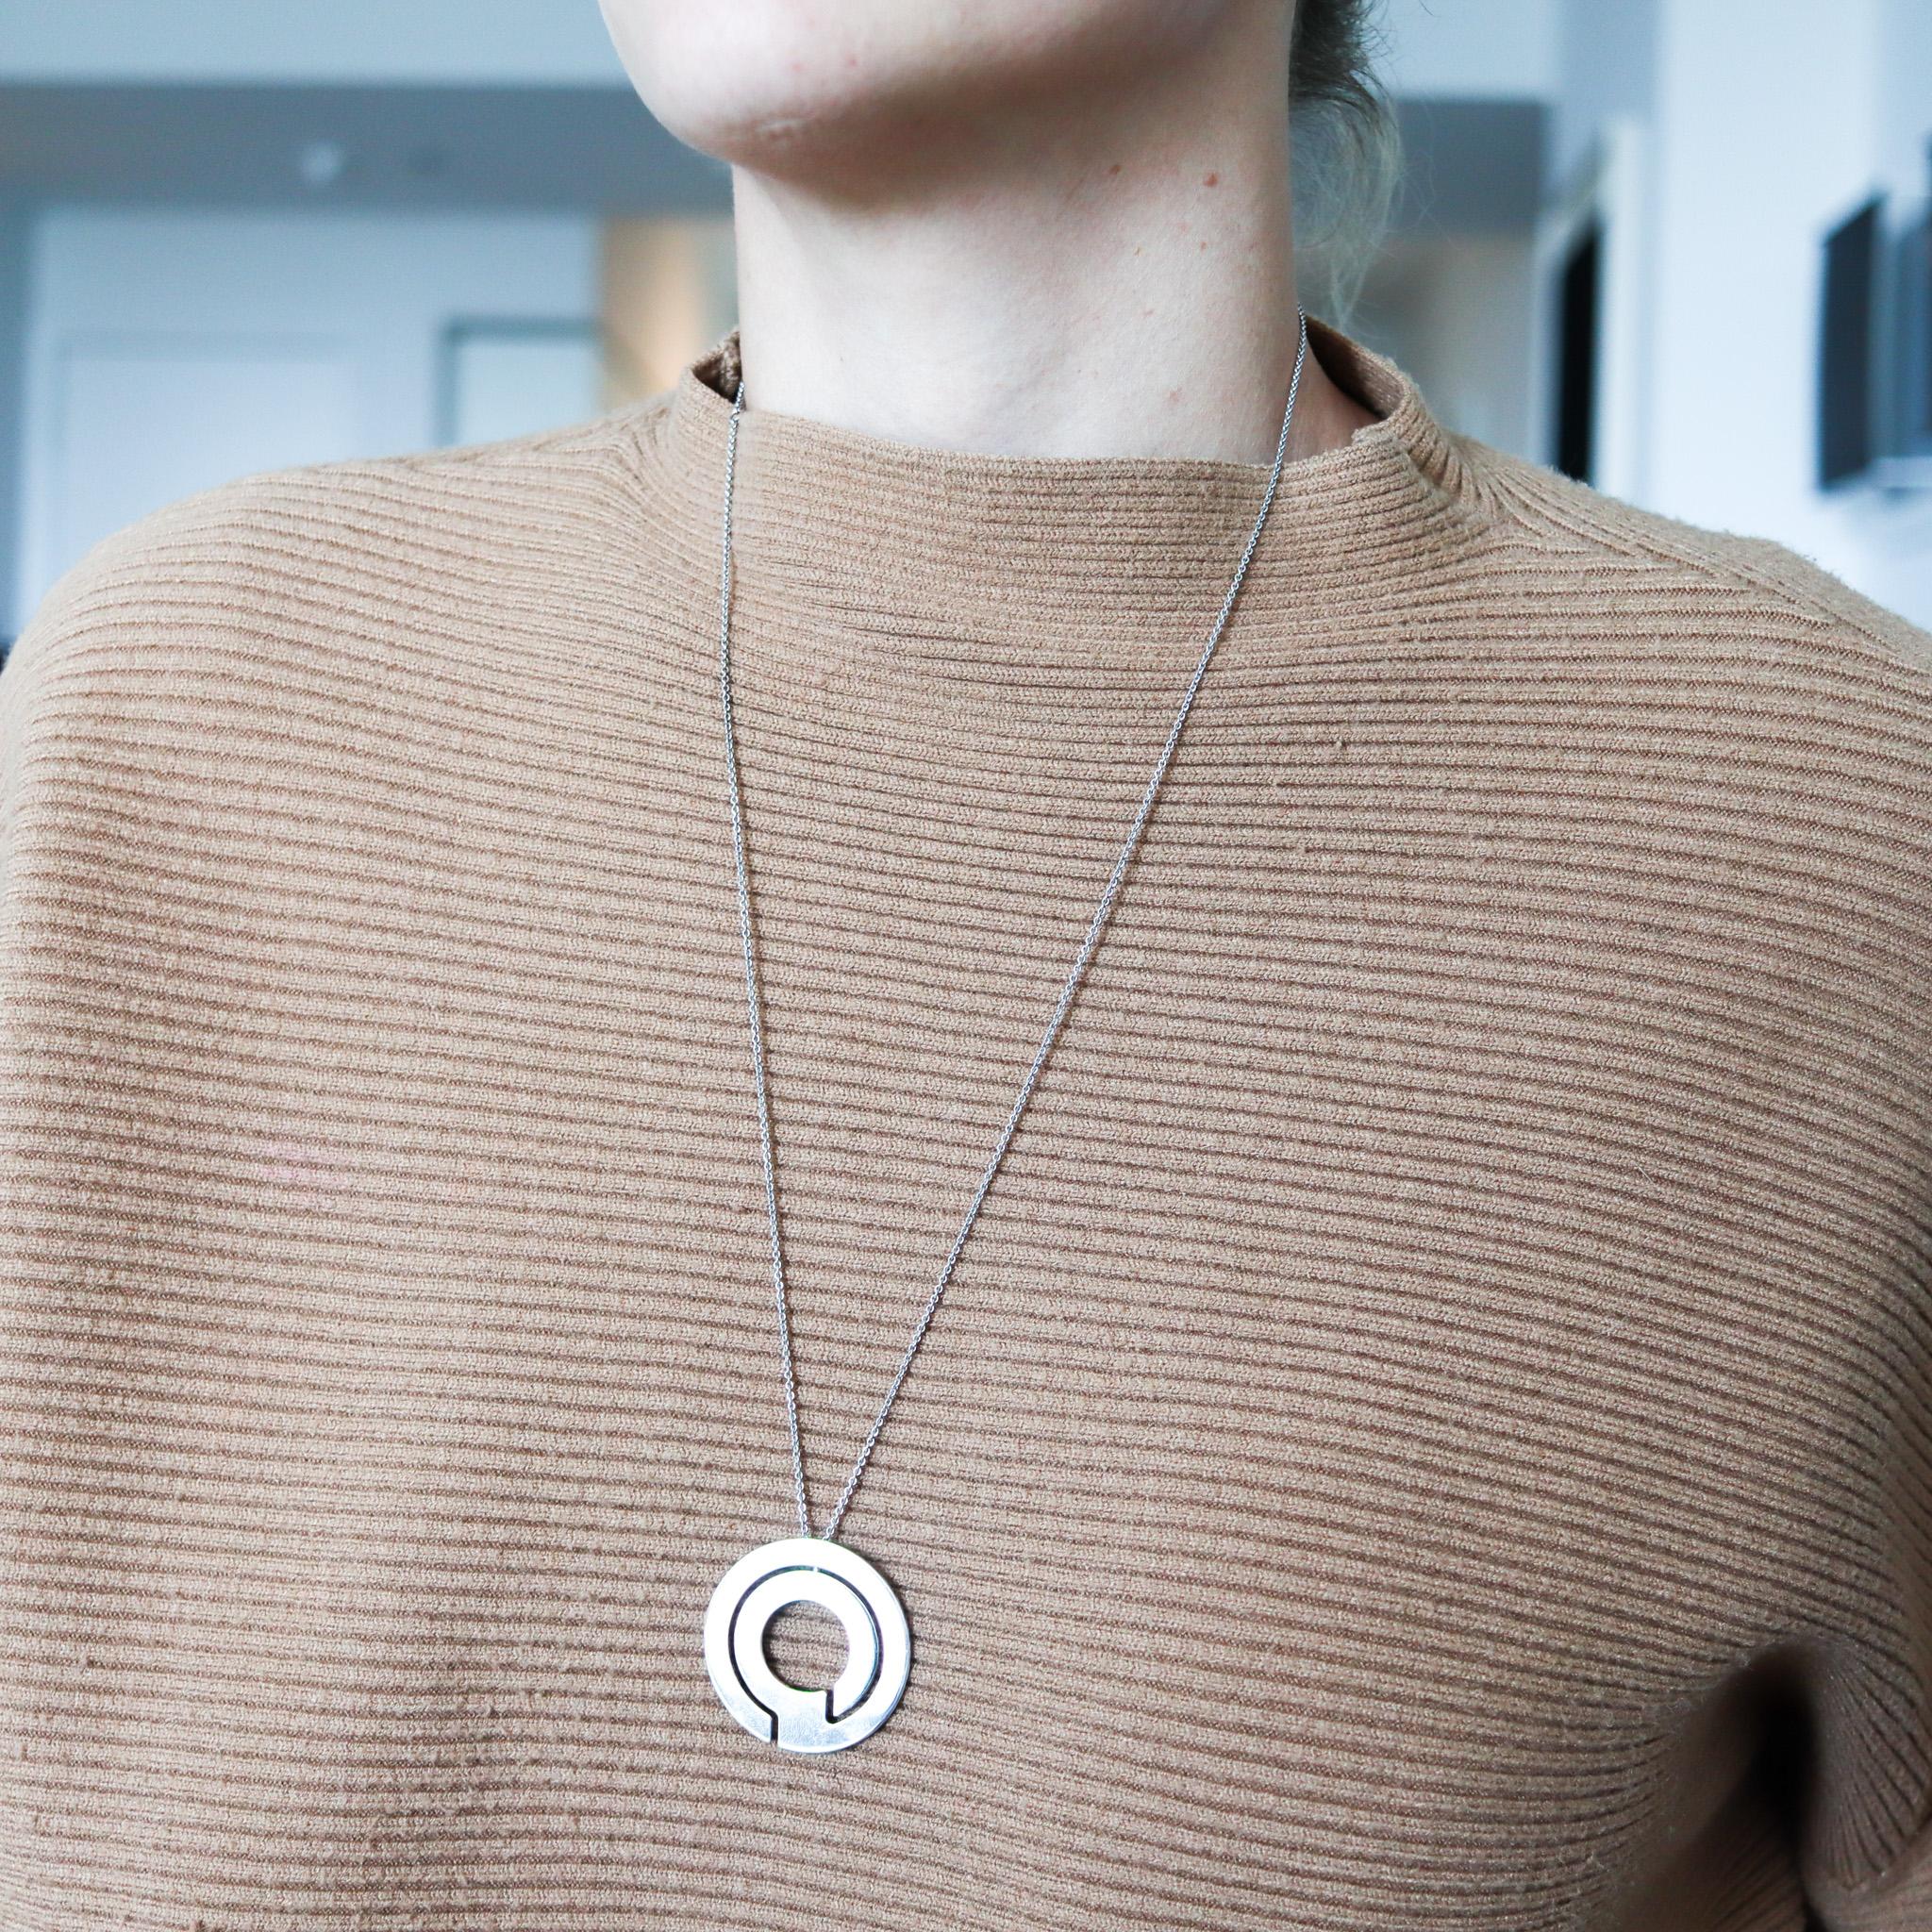 Dinh Van Paris Modernism Geometric Labyrinth Necklace Pendant in Sterling Silver For Sale 5